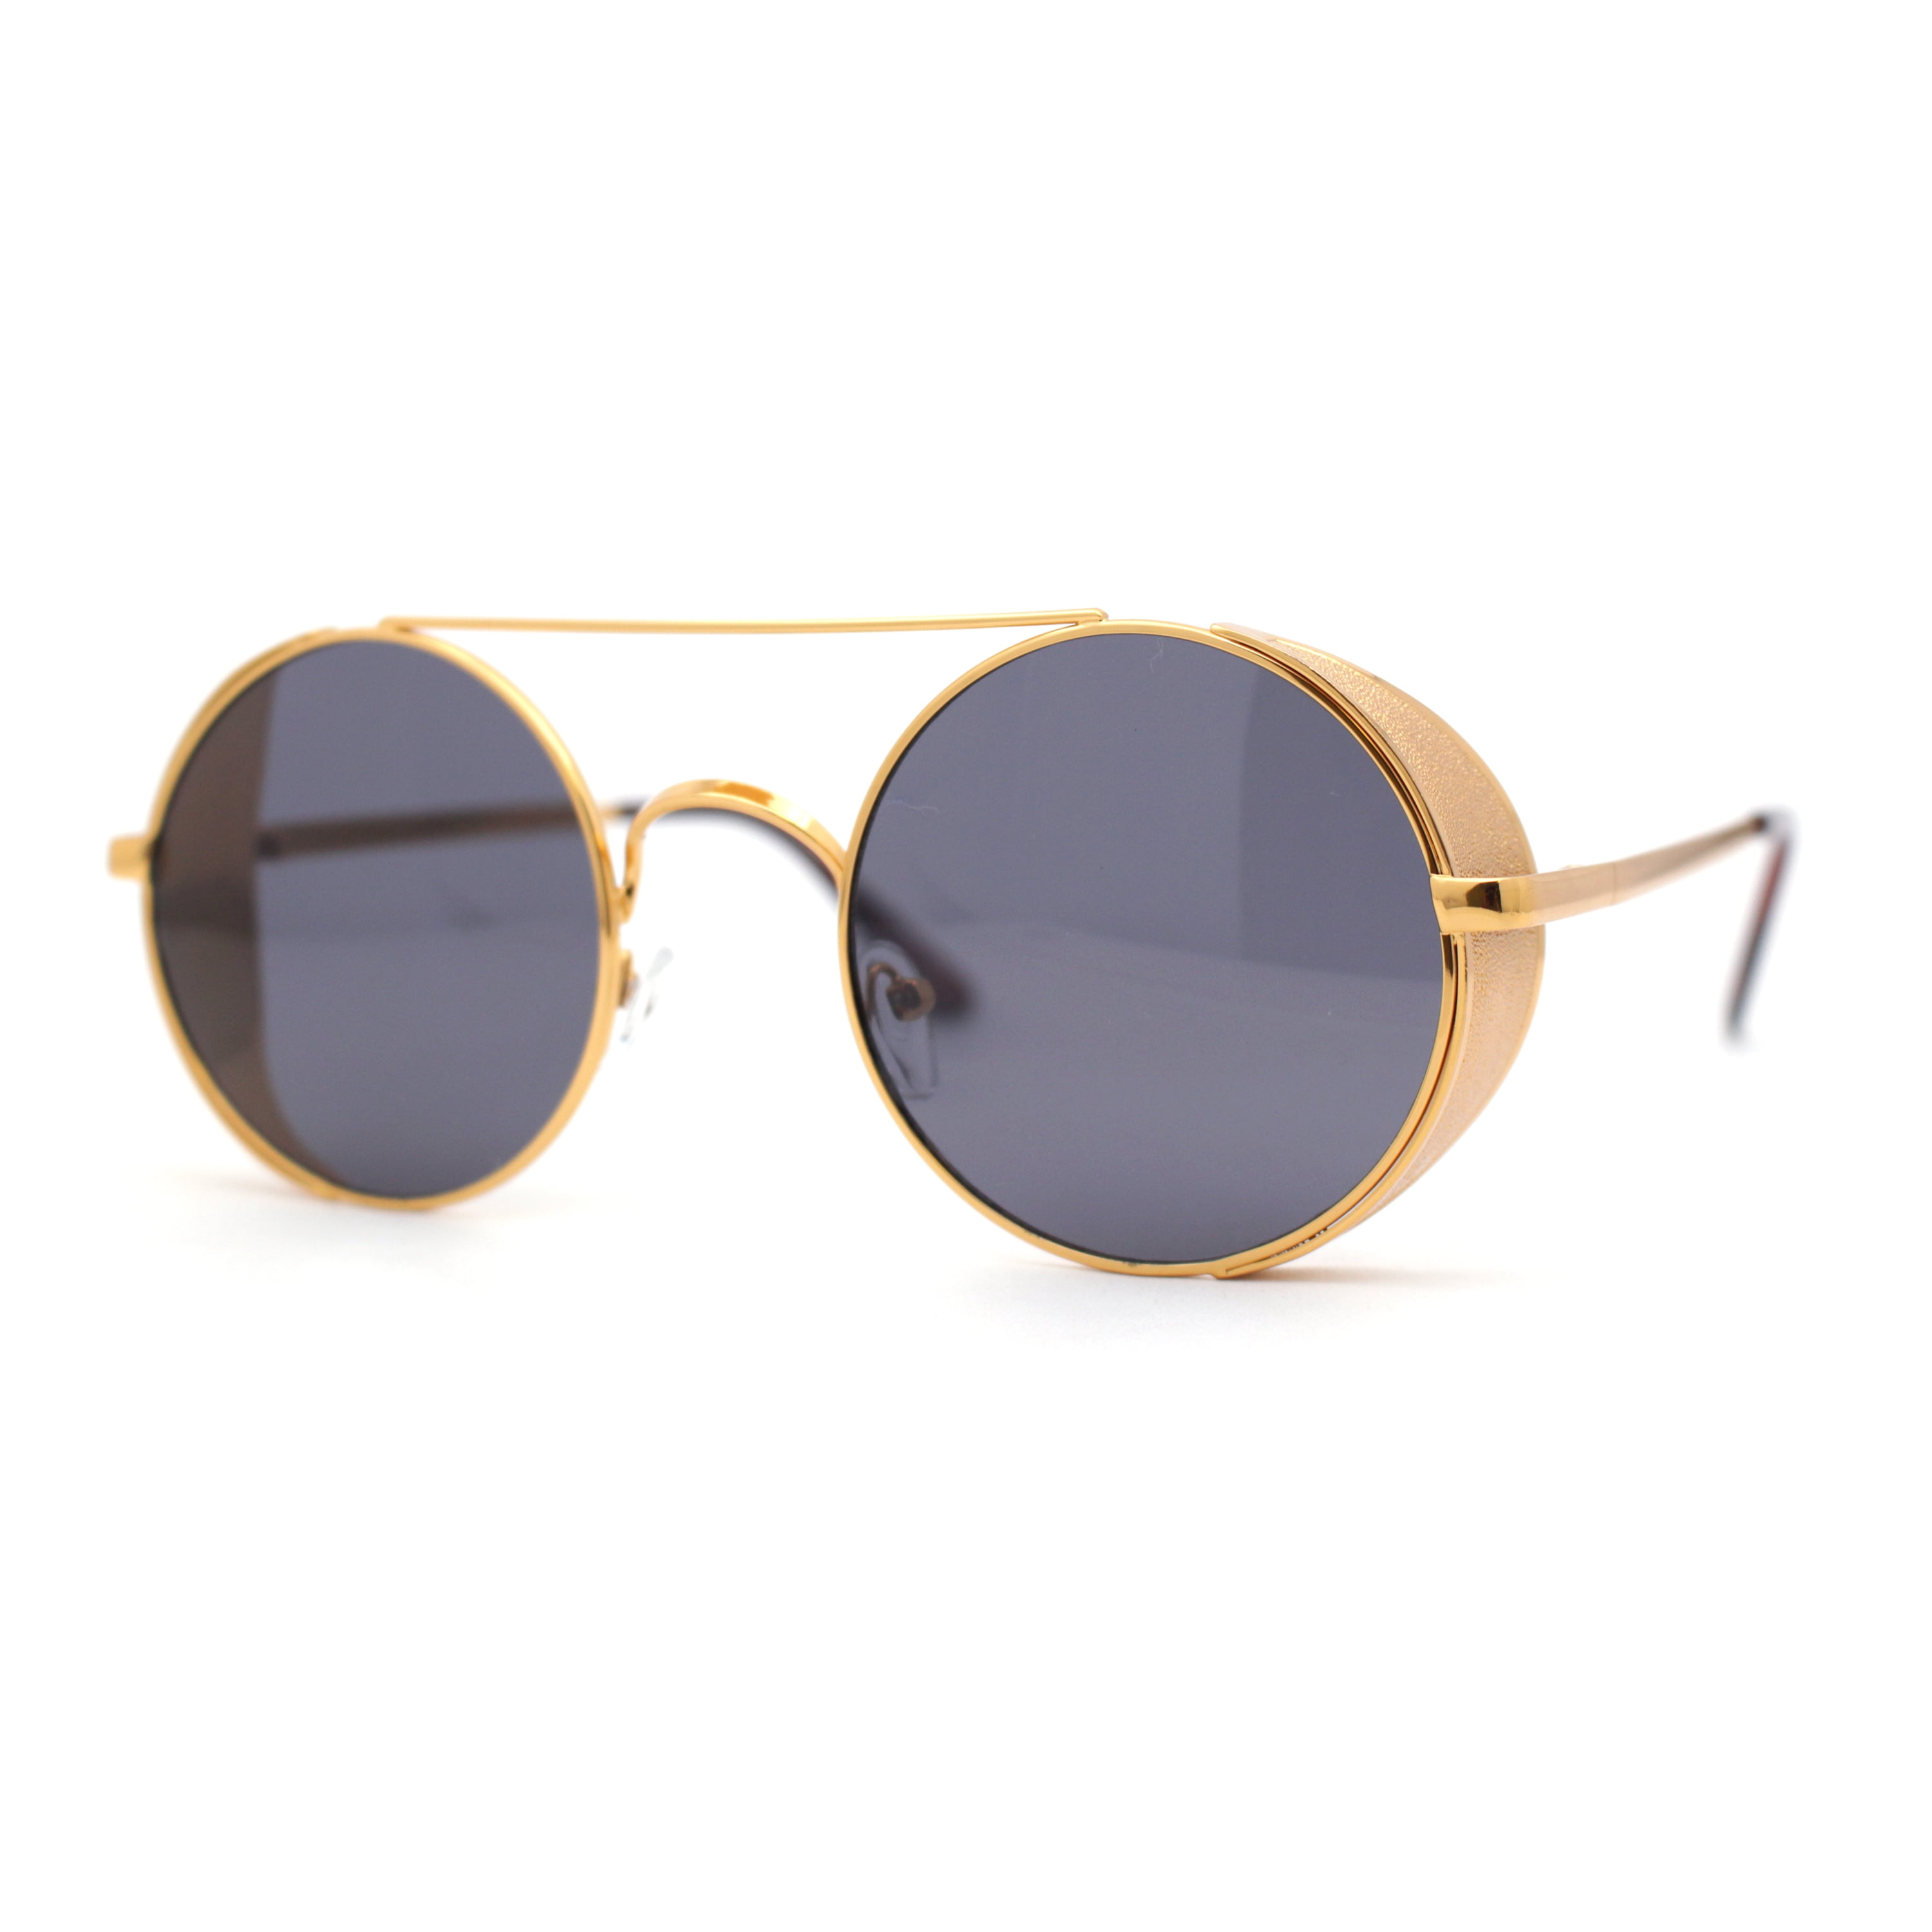 Round Circle Lens Side Windbreaker Retro Double Bridge Cafe Racer Sunglasses  Yellow Gold - Black 